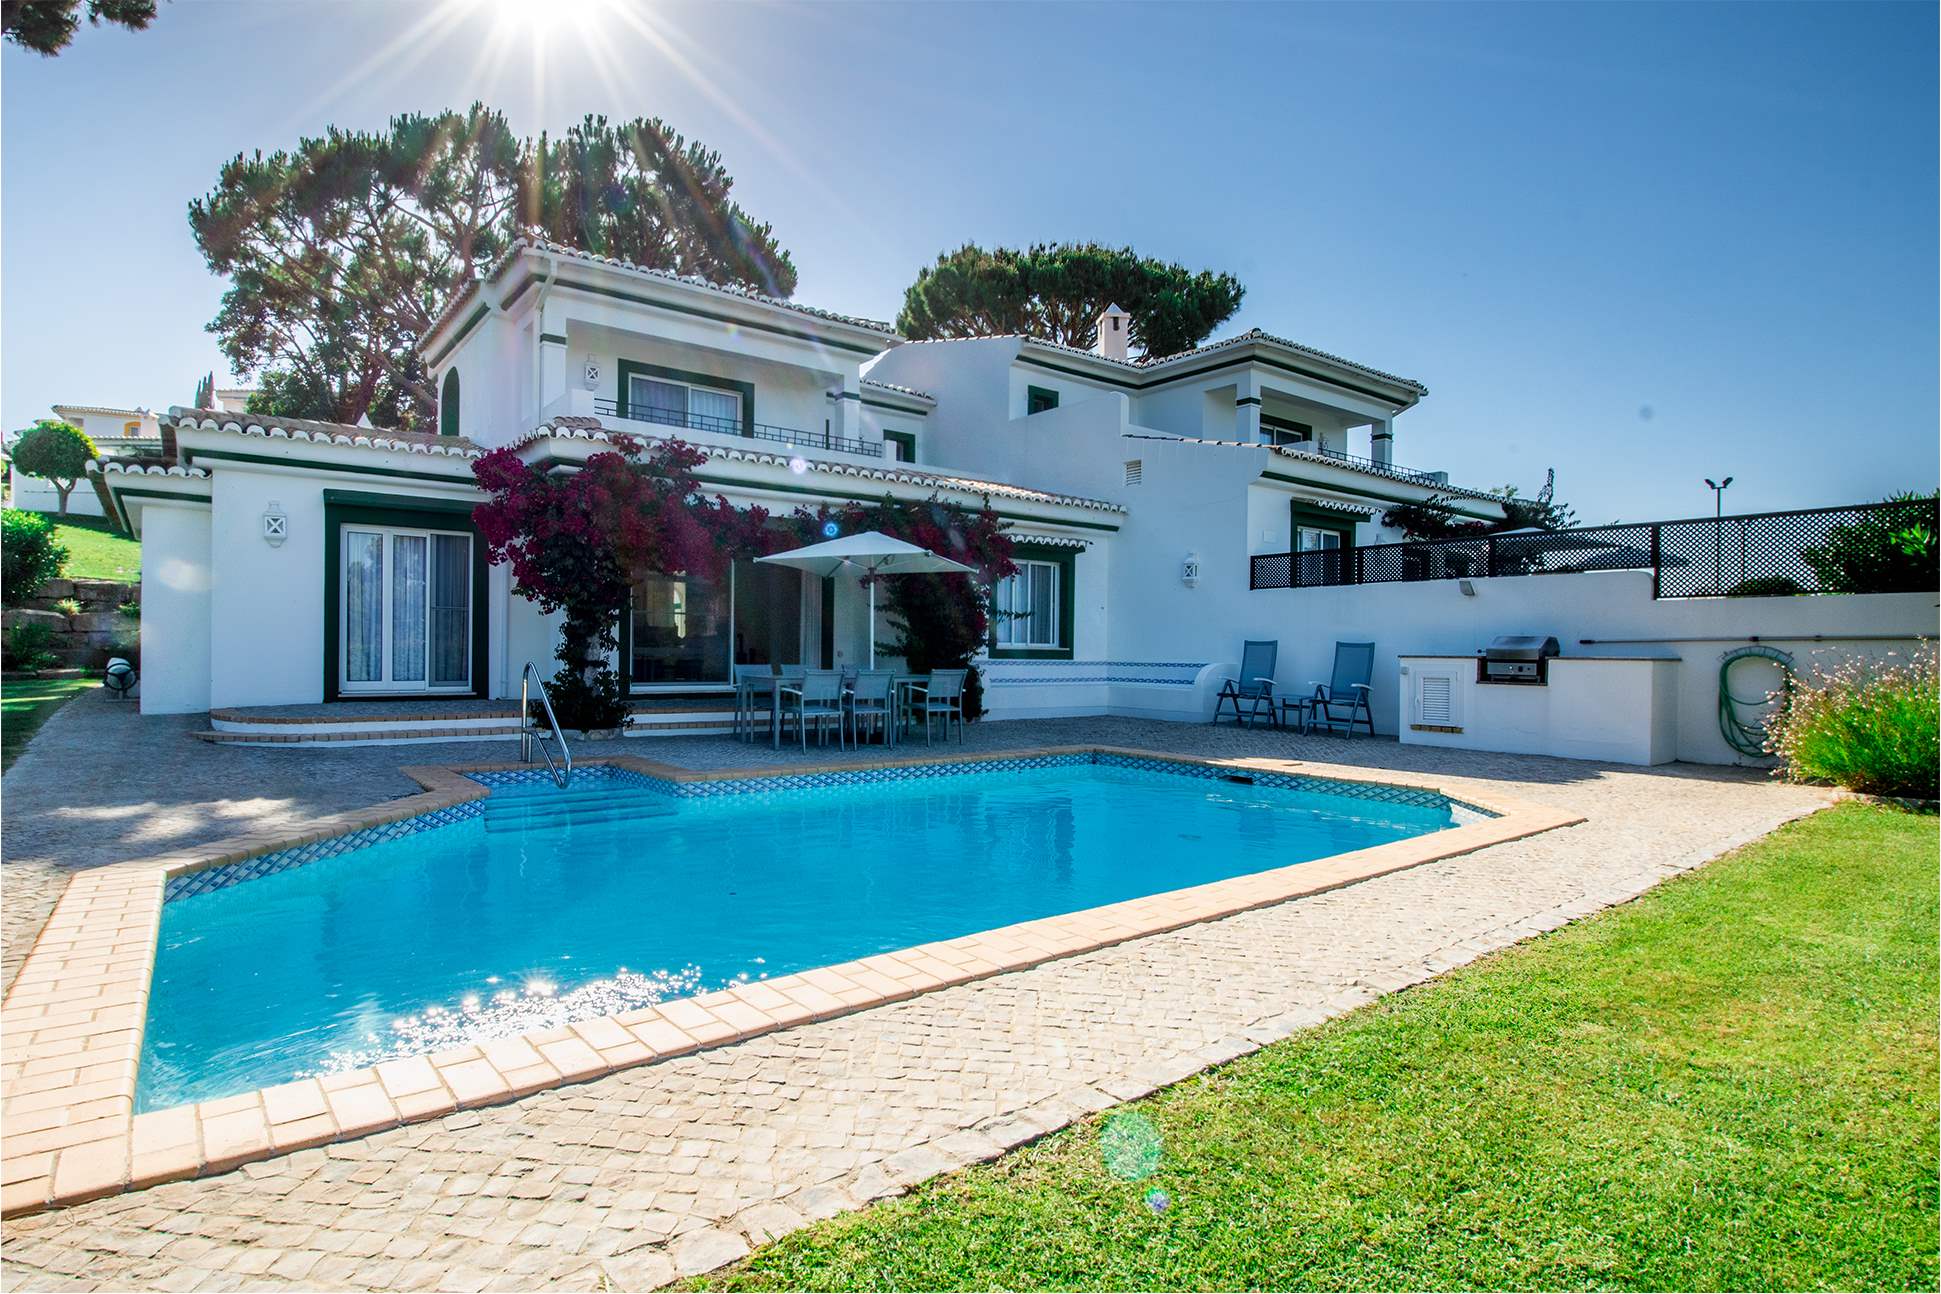 Four Seasons Fairways 2 Bed Cluster Villa + Study, Thursday Arrival, 2 bedroom villa in Four Seasons Fairways, Algarve